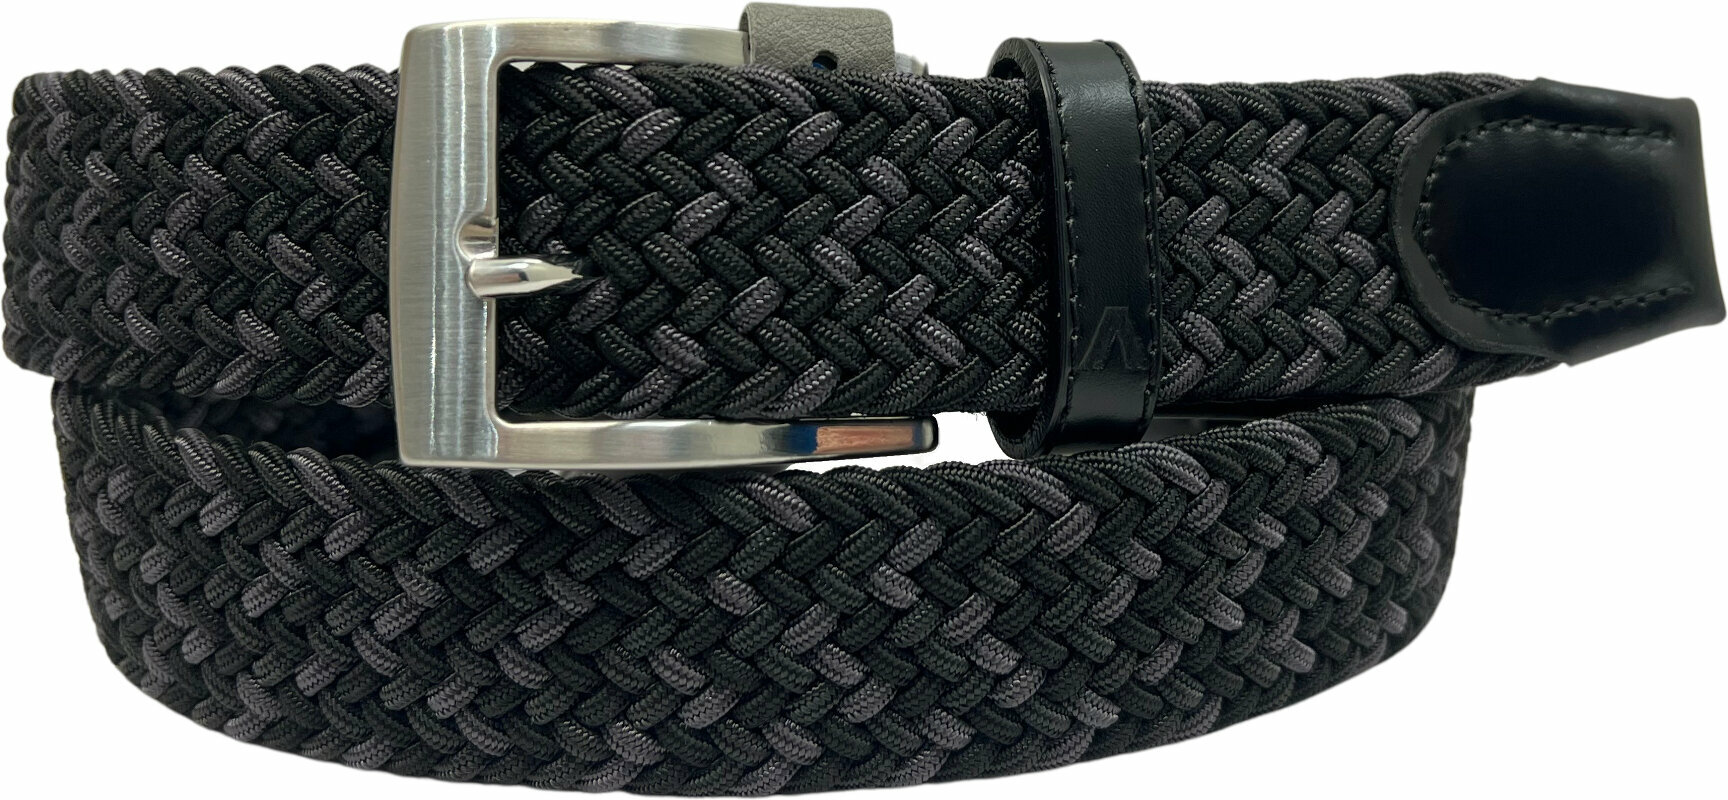 Cinture Alberto Gürtel Multicolor Braided Belt Black/Grey 85